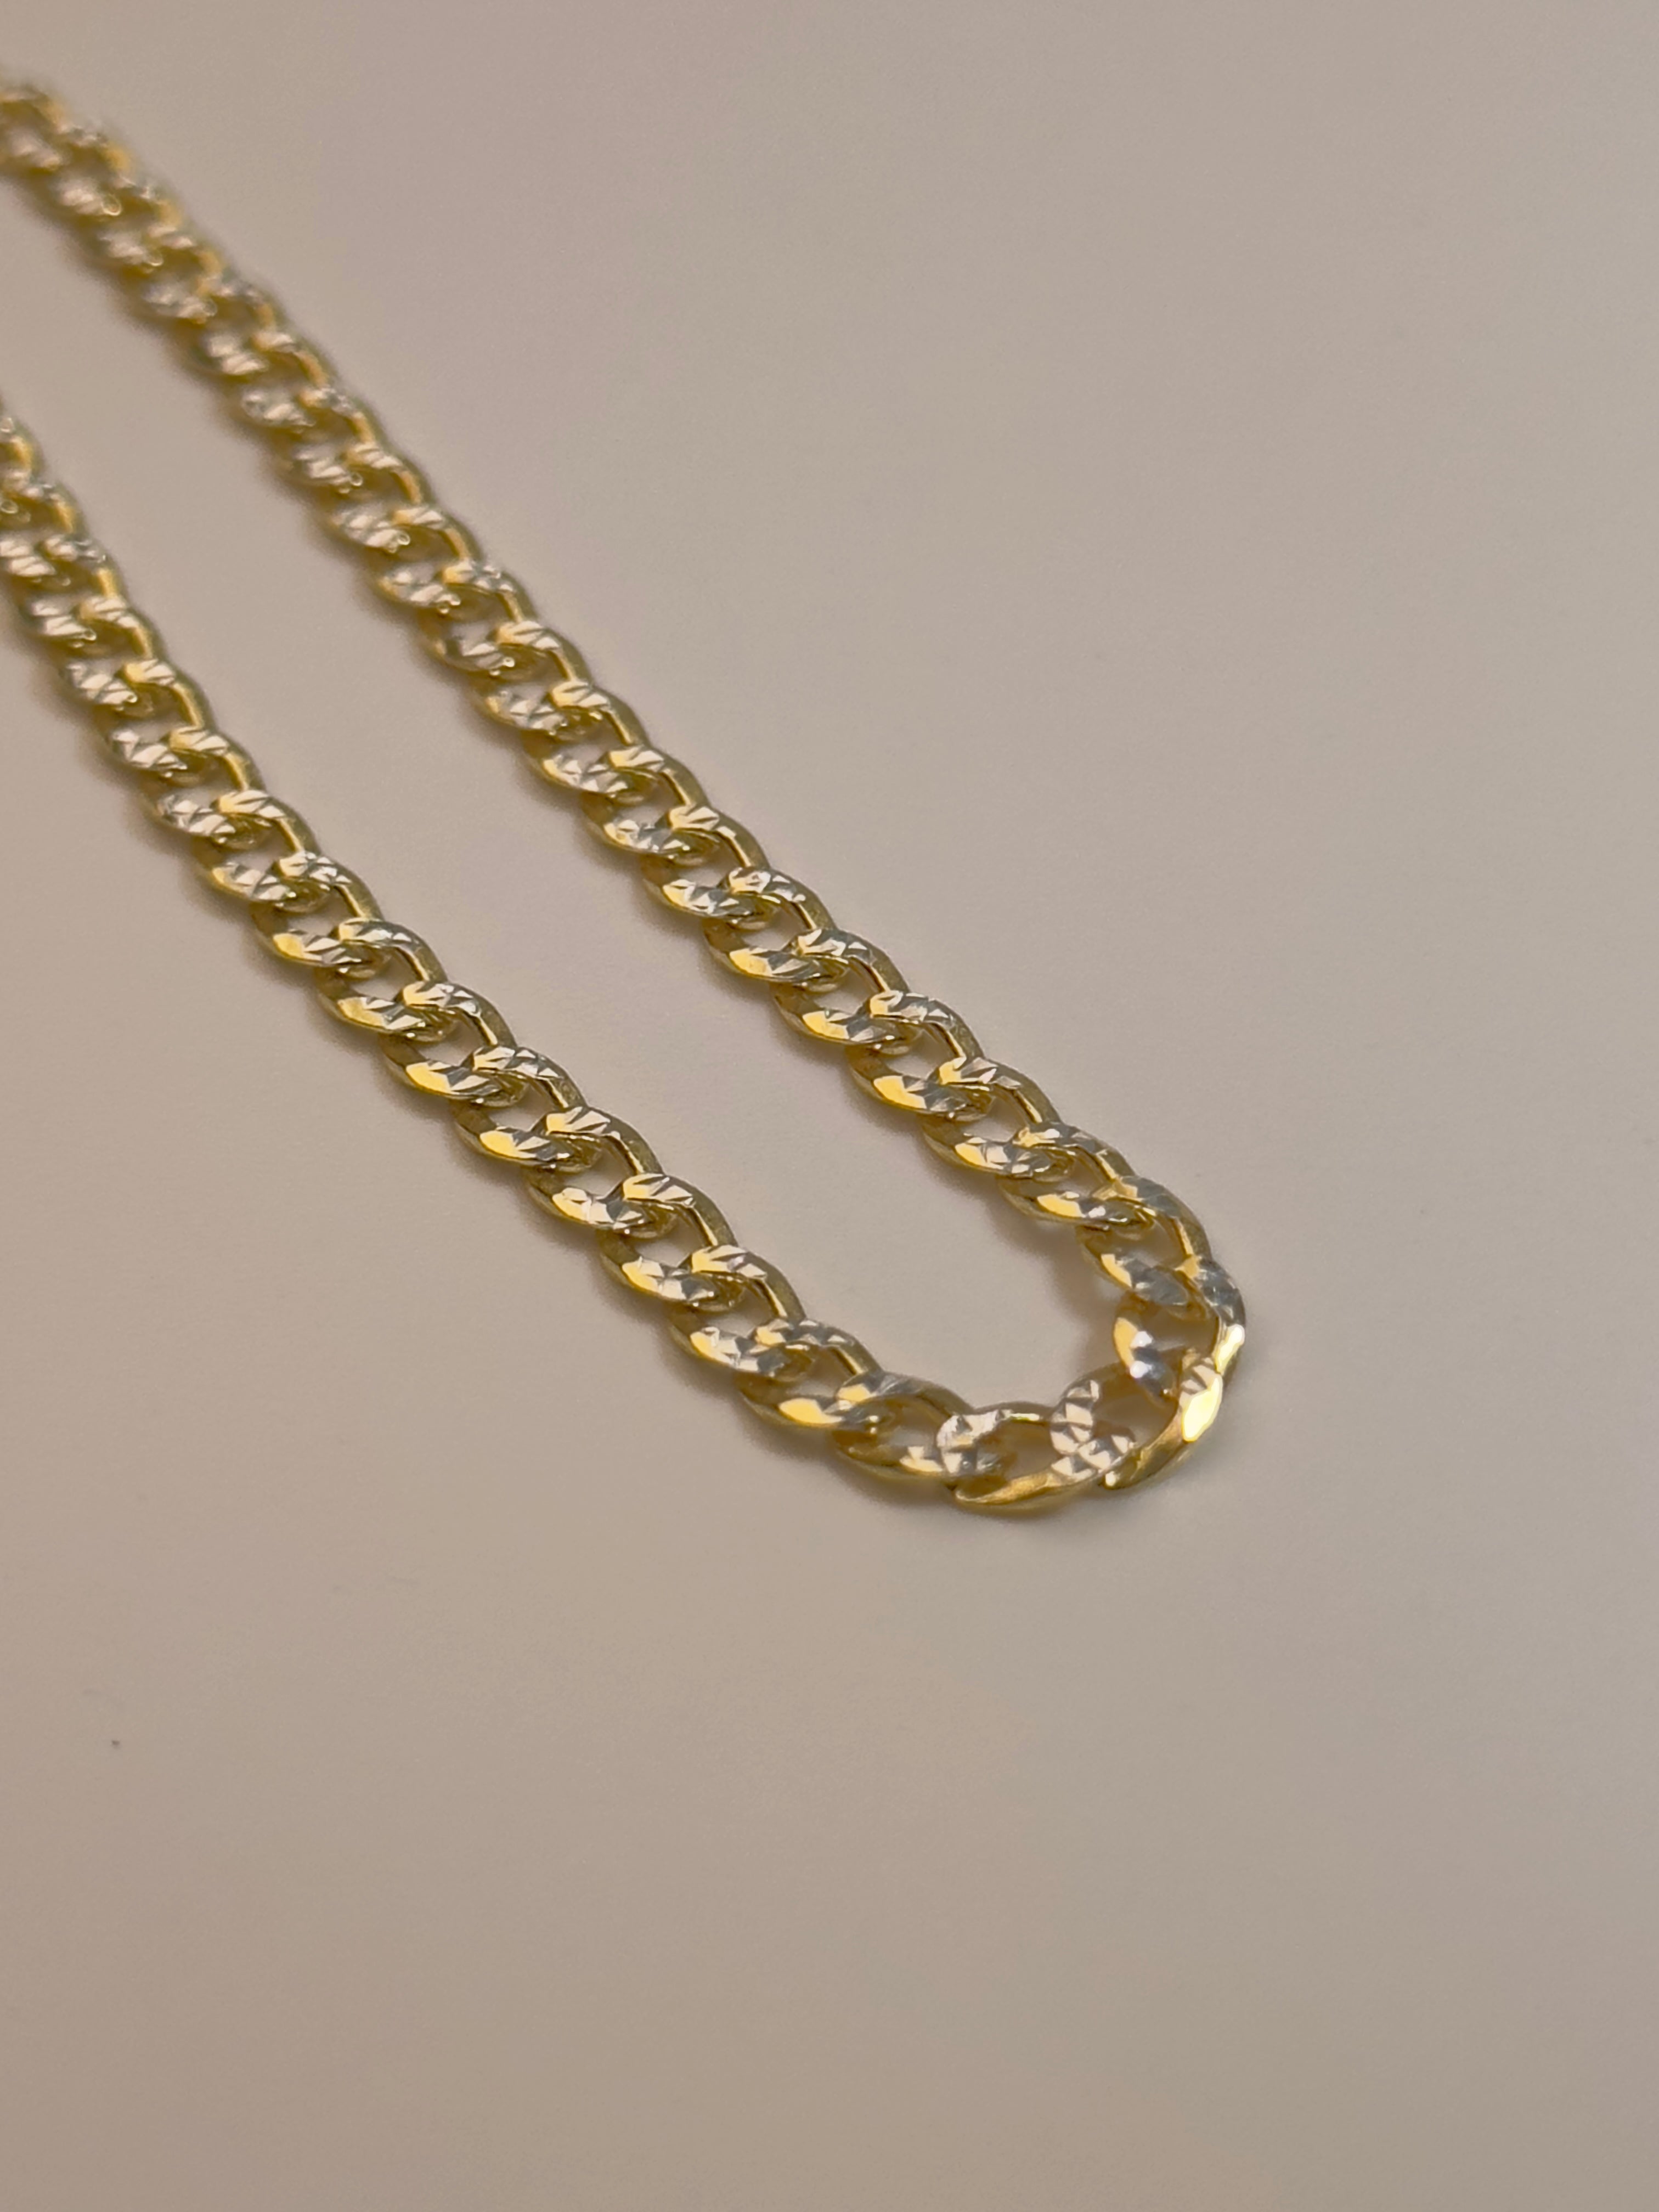 DR3106 - 925 Sterling Silver,14K YG Bonded - Men's Gold Chains - Cuban w/ Diamond Cut